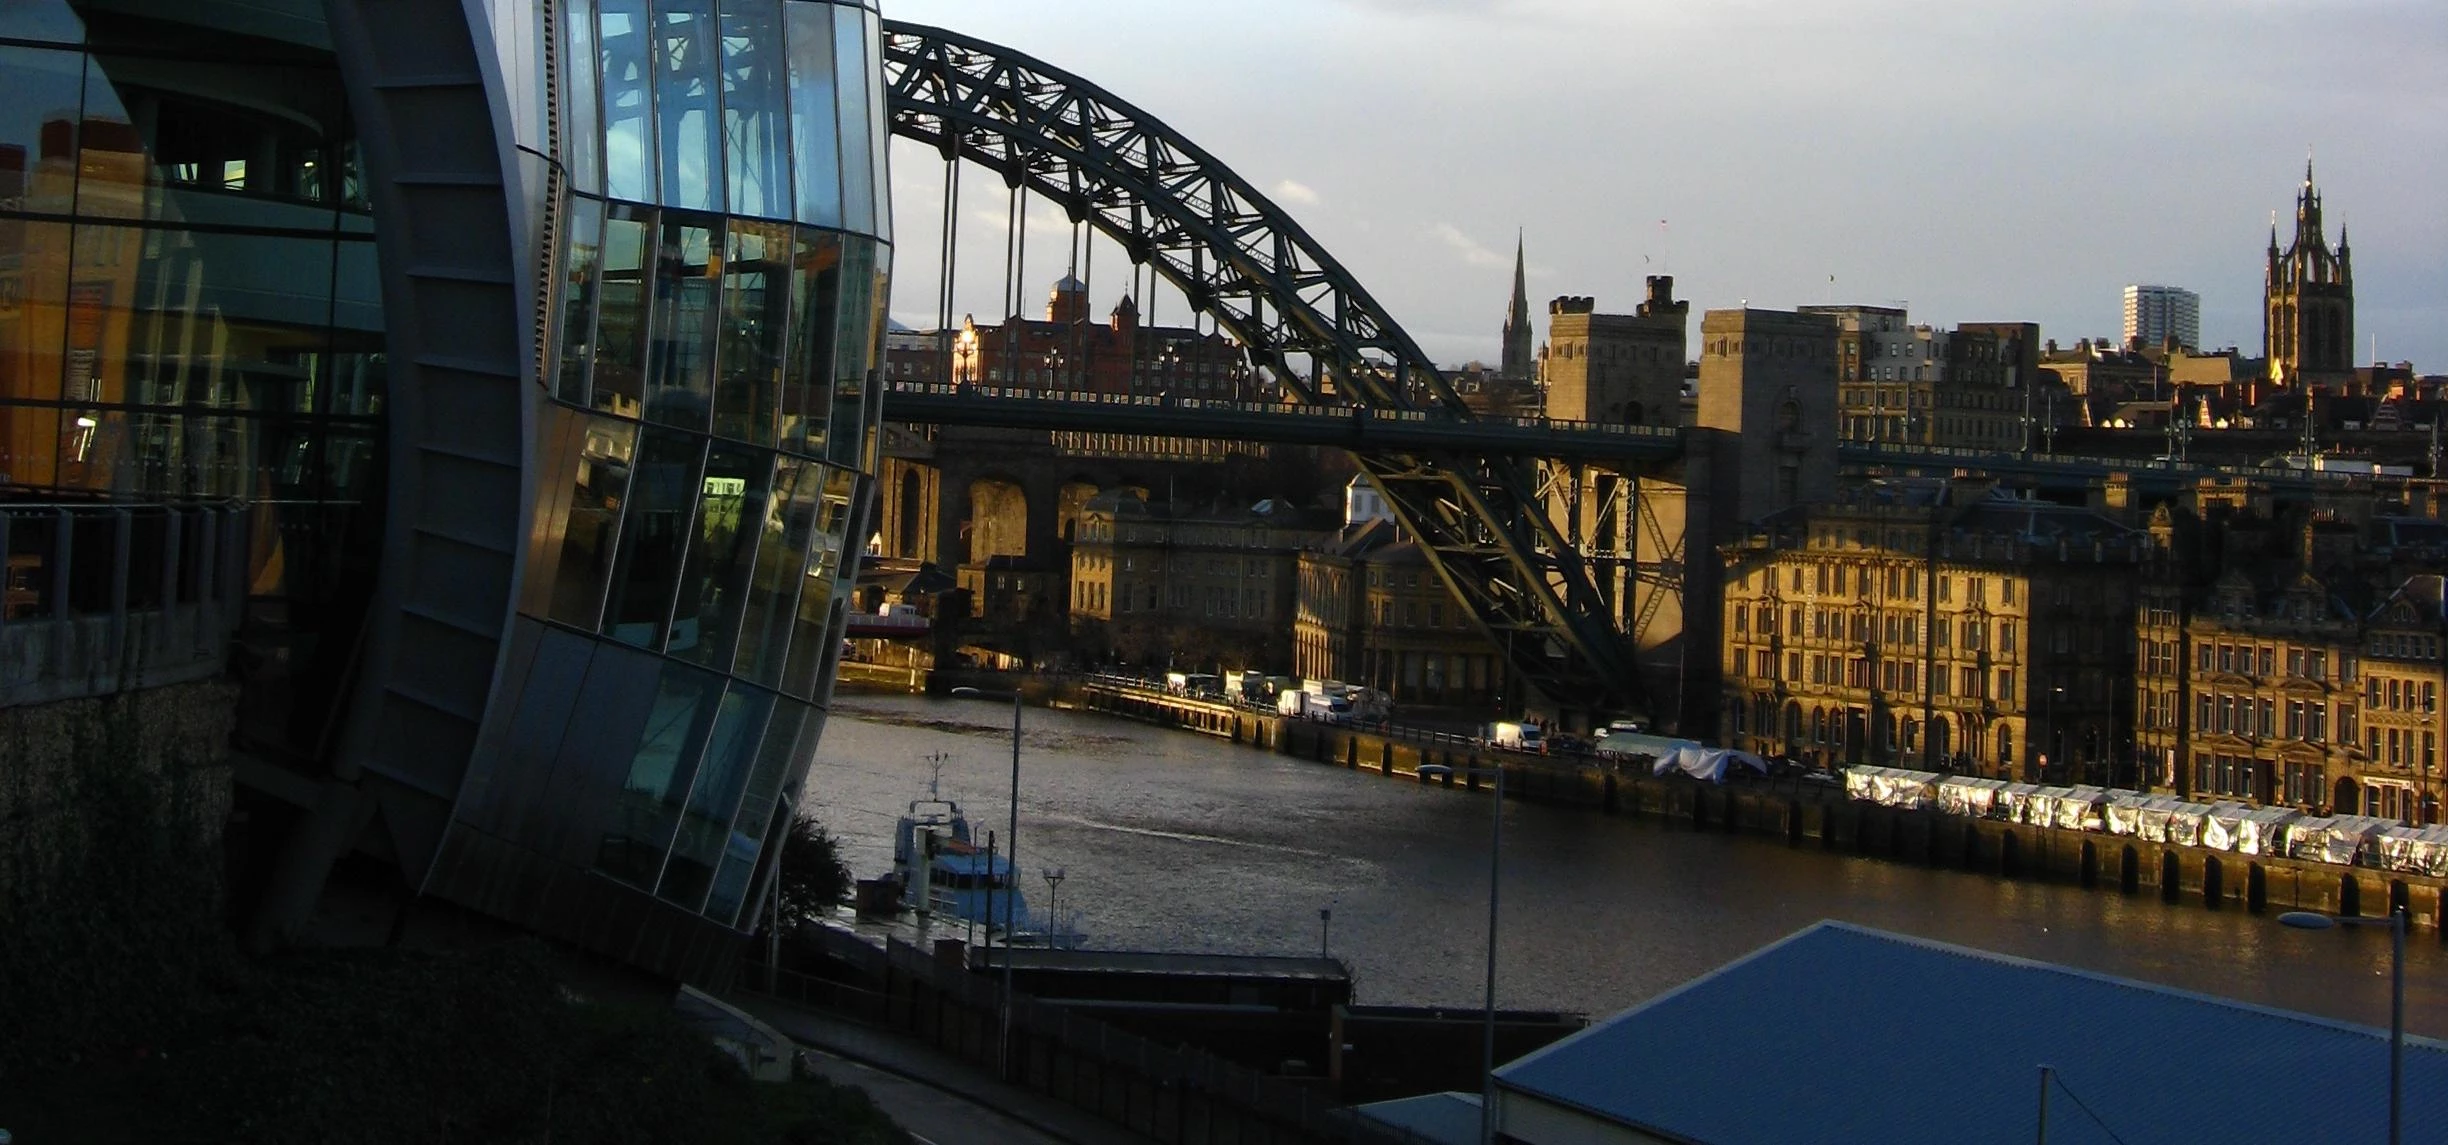 The Sage and the Tyne Bridge - Newcastle Gateshead Quayside